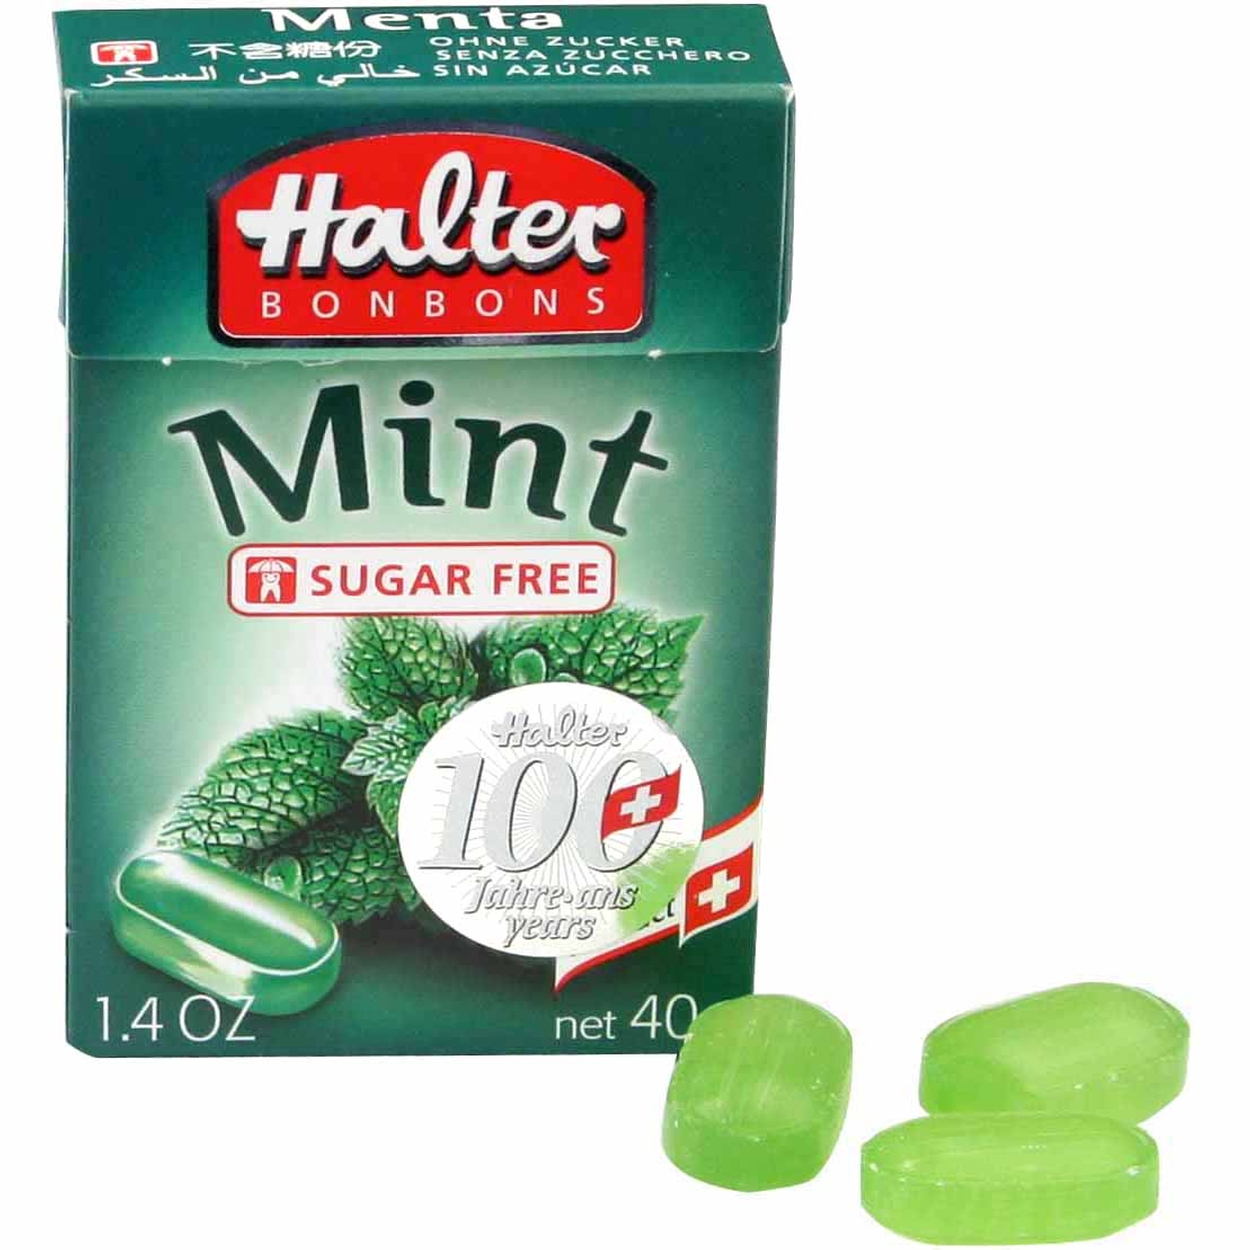 Mint candy